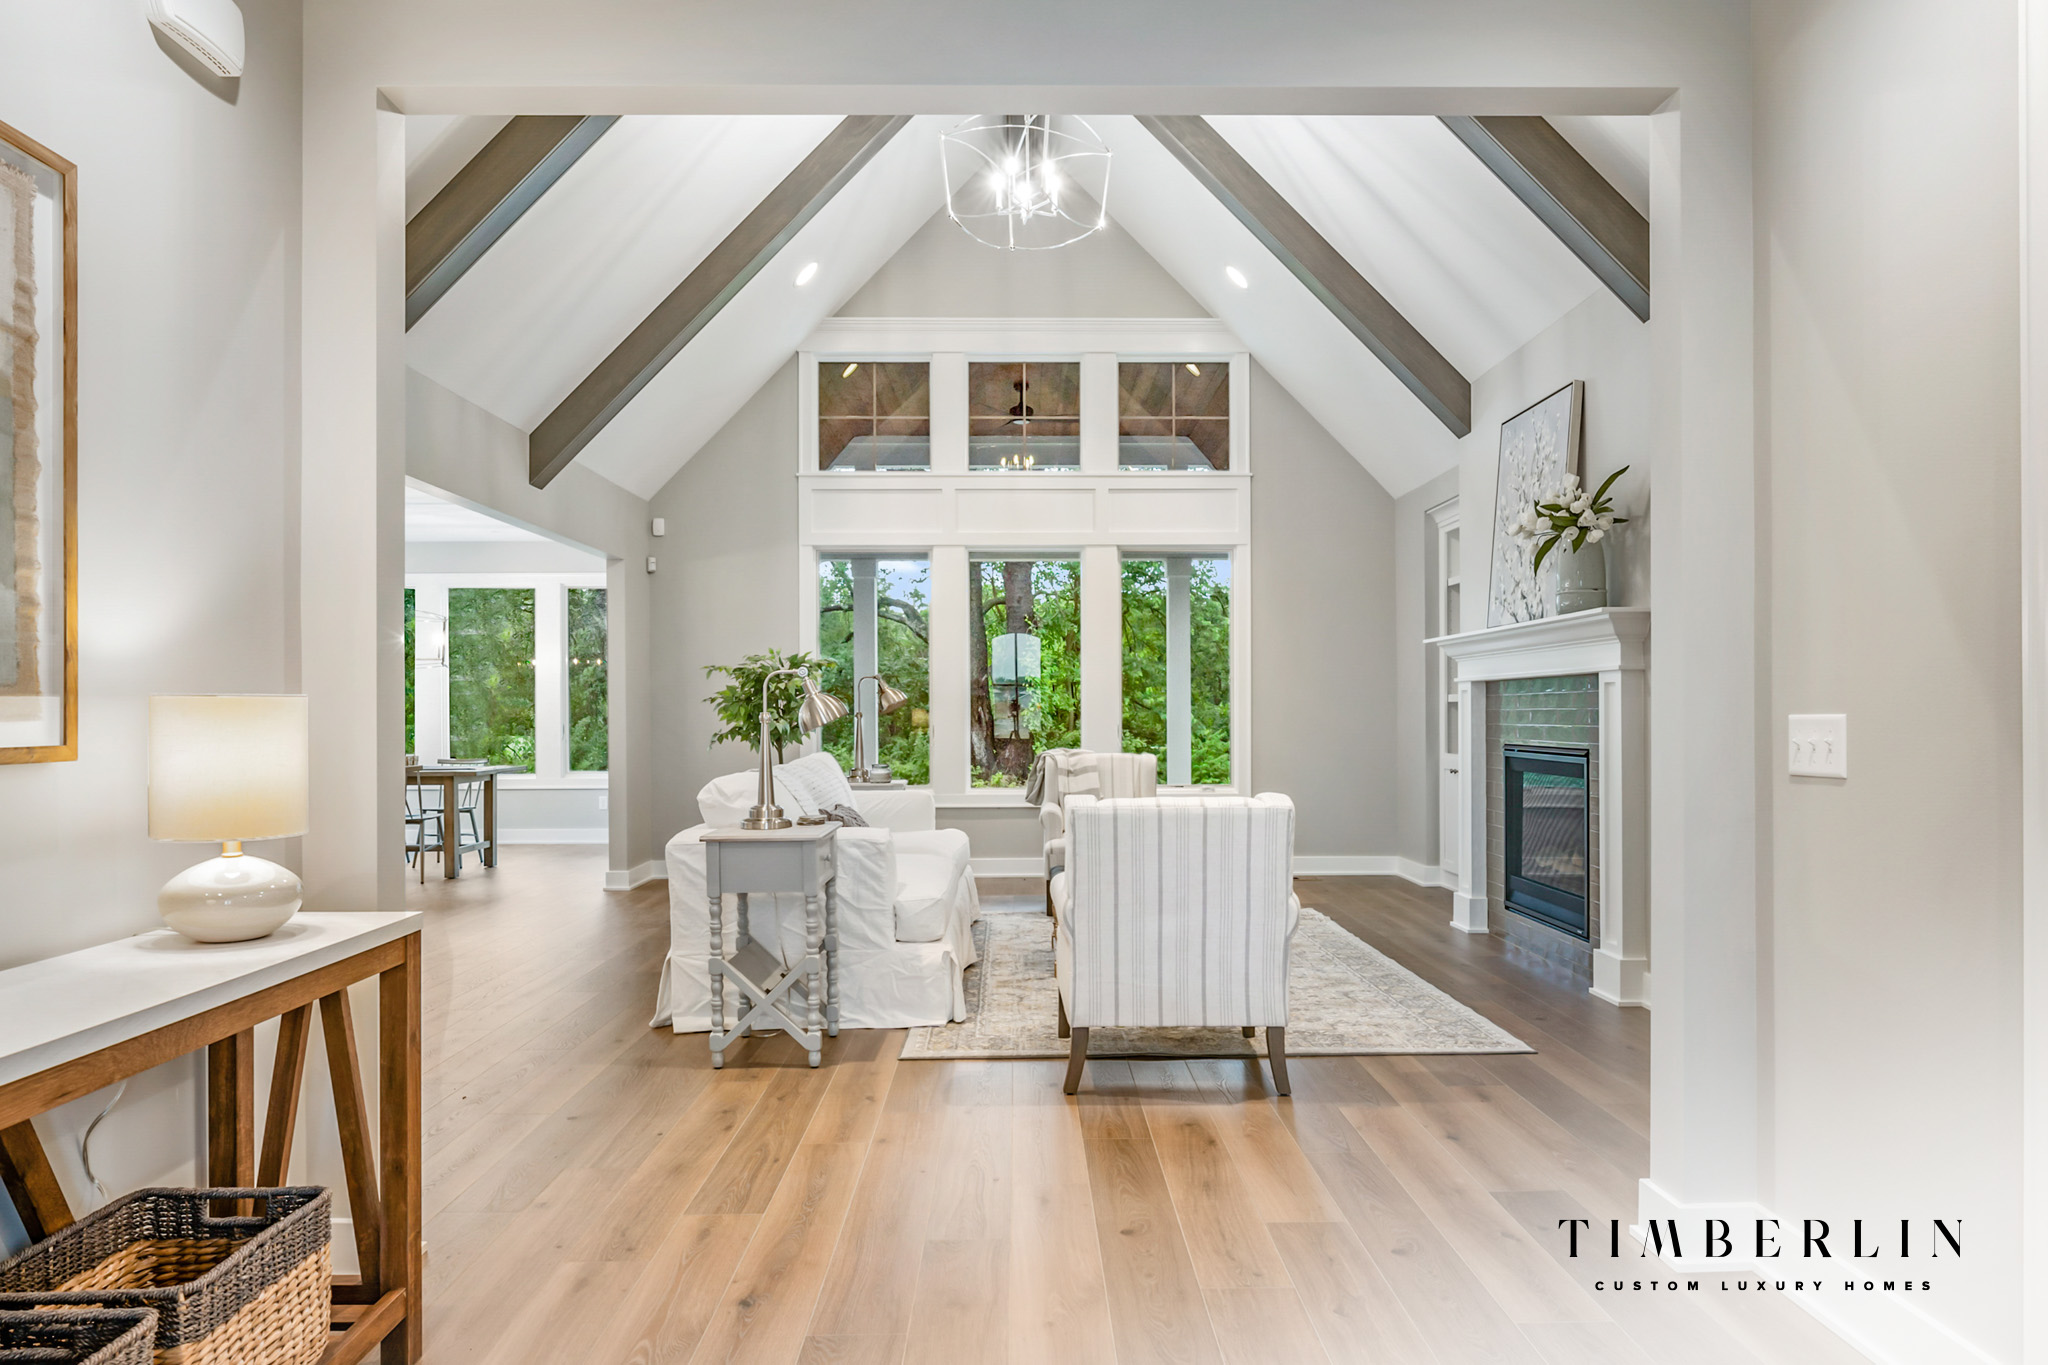 Timberlin Custom Luxury Homes - Fireplace in Great Room